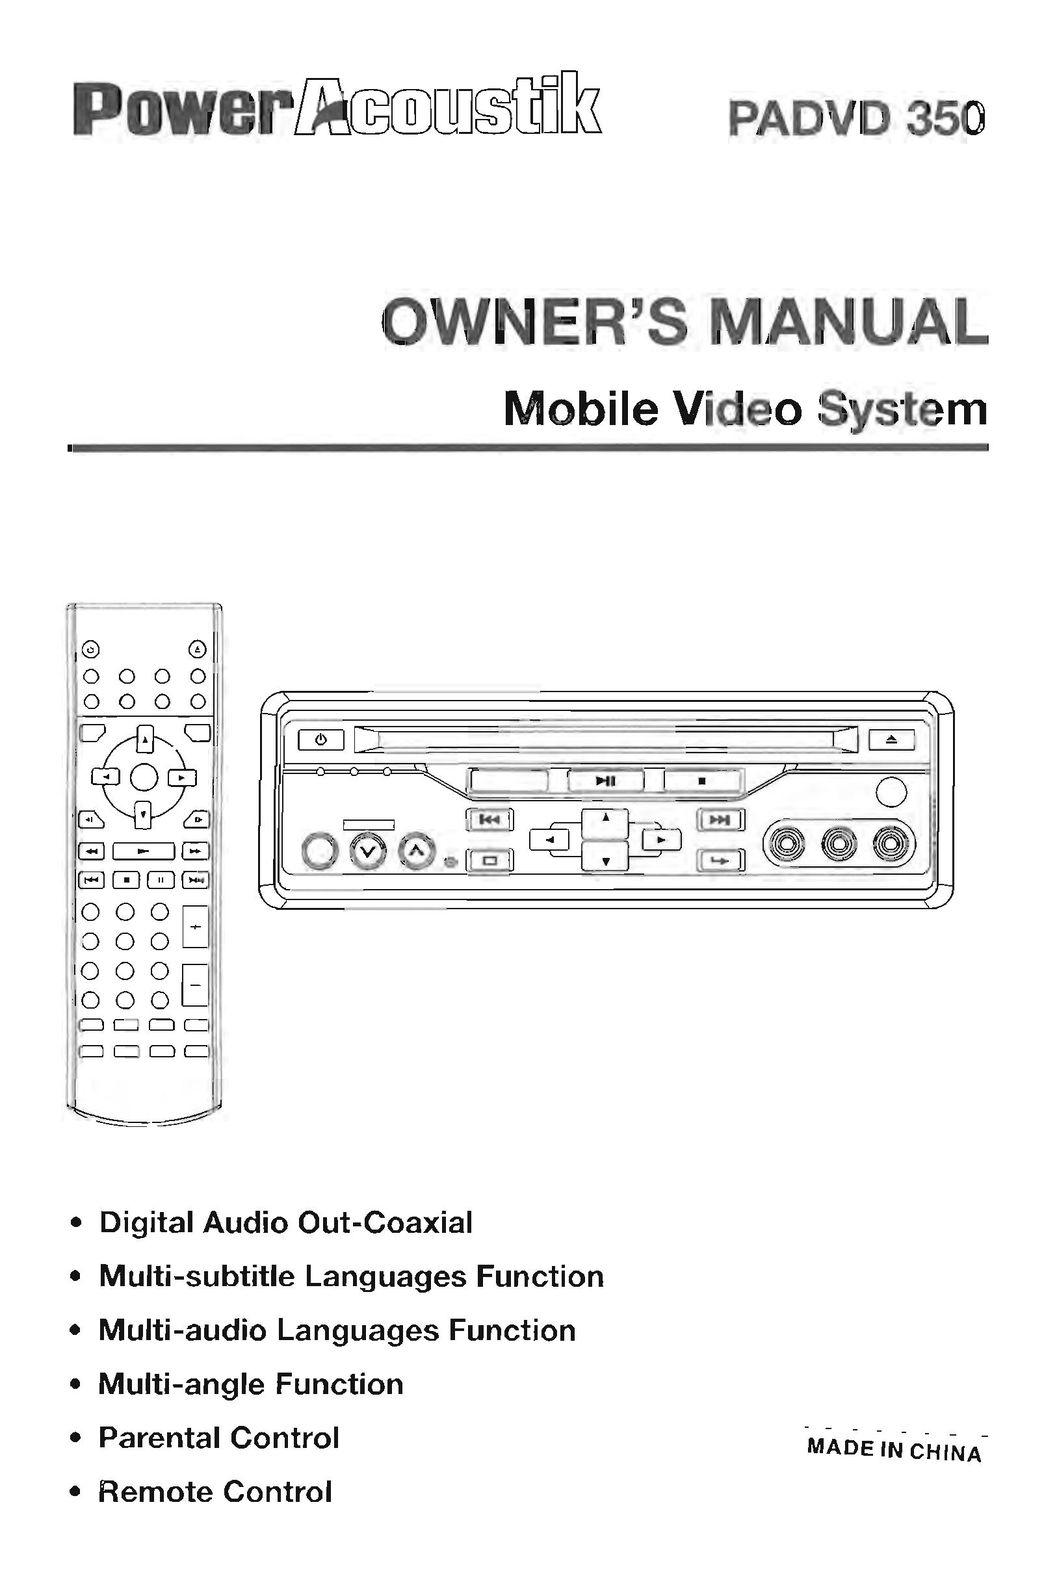 Power Acoustik PADVD 350 Car Video System User Manual